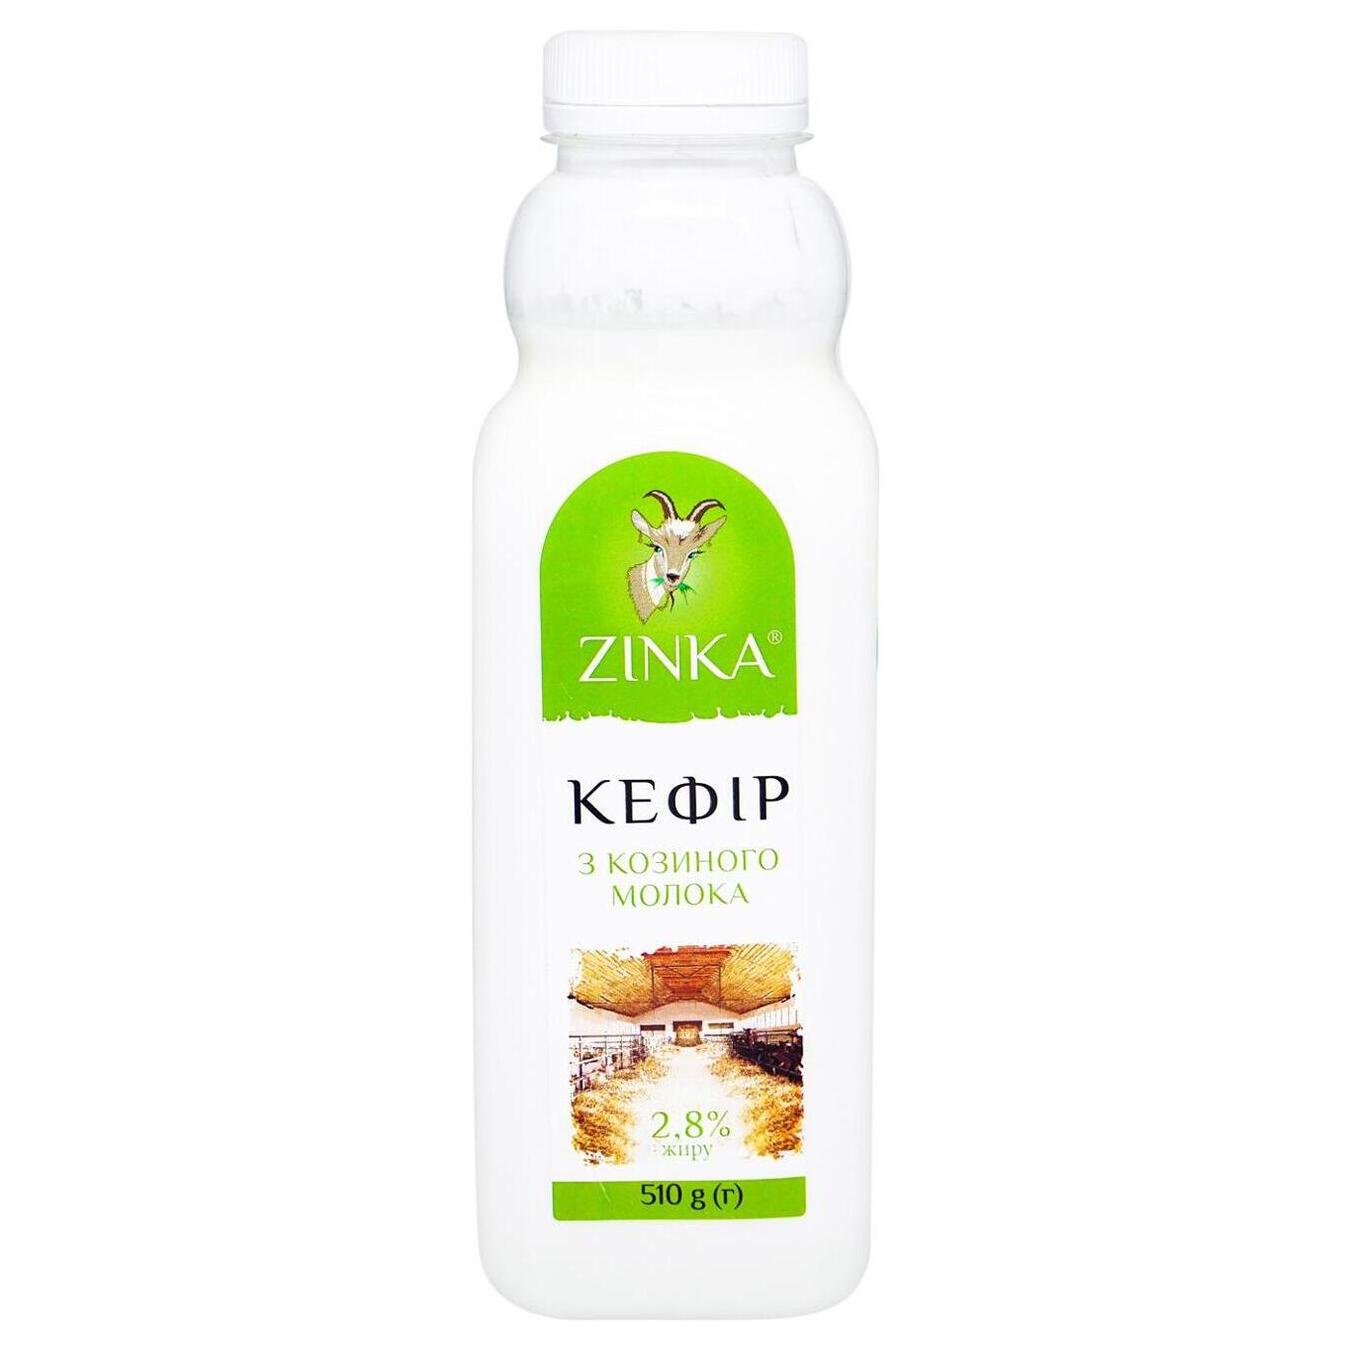 Zinka goat's milk Kefir 2.8% 510g